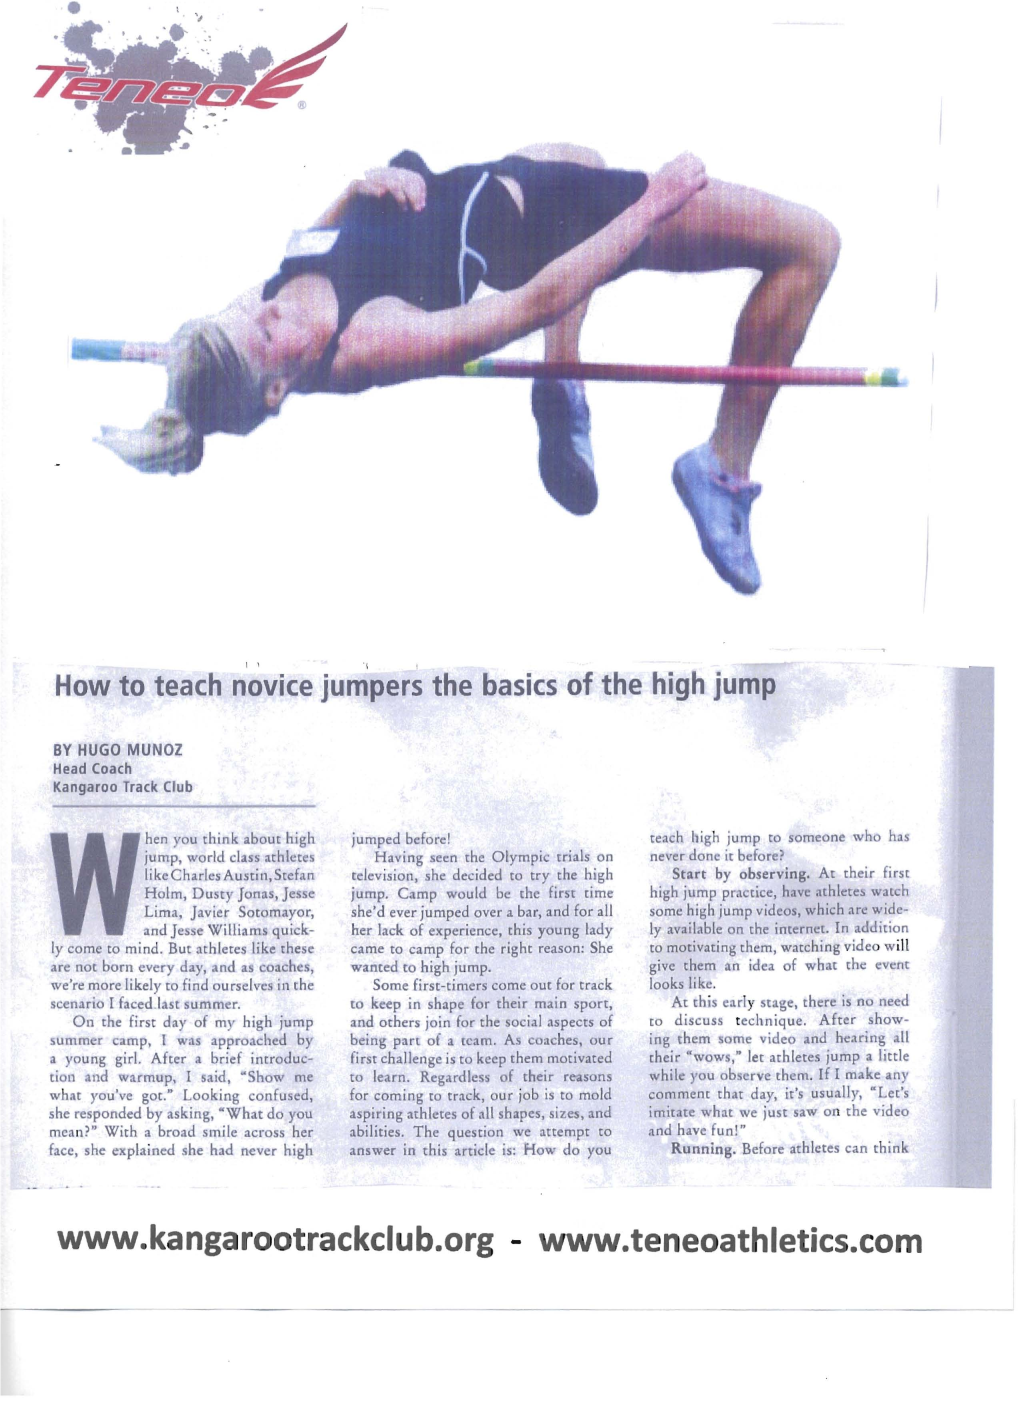 How to Teach Novice Jumpers the Basics of the High Jump